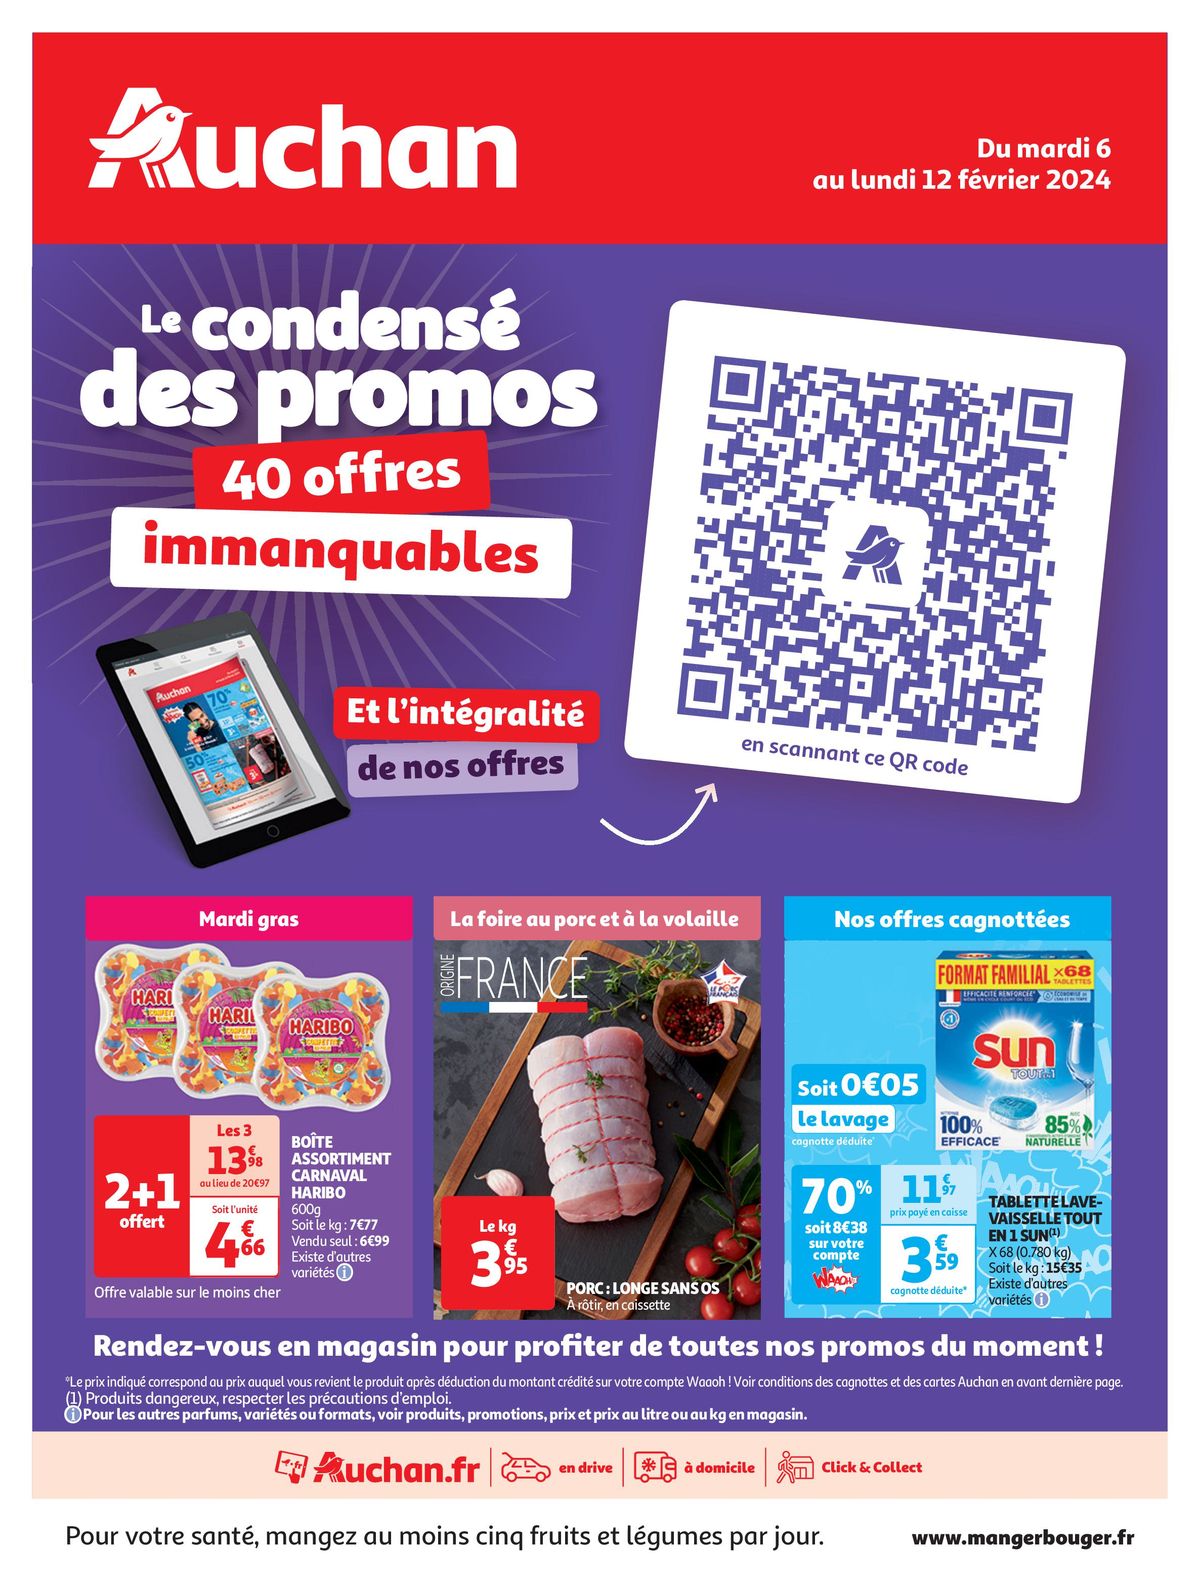 Catalogue Le condensé des promos !, page 00001